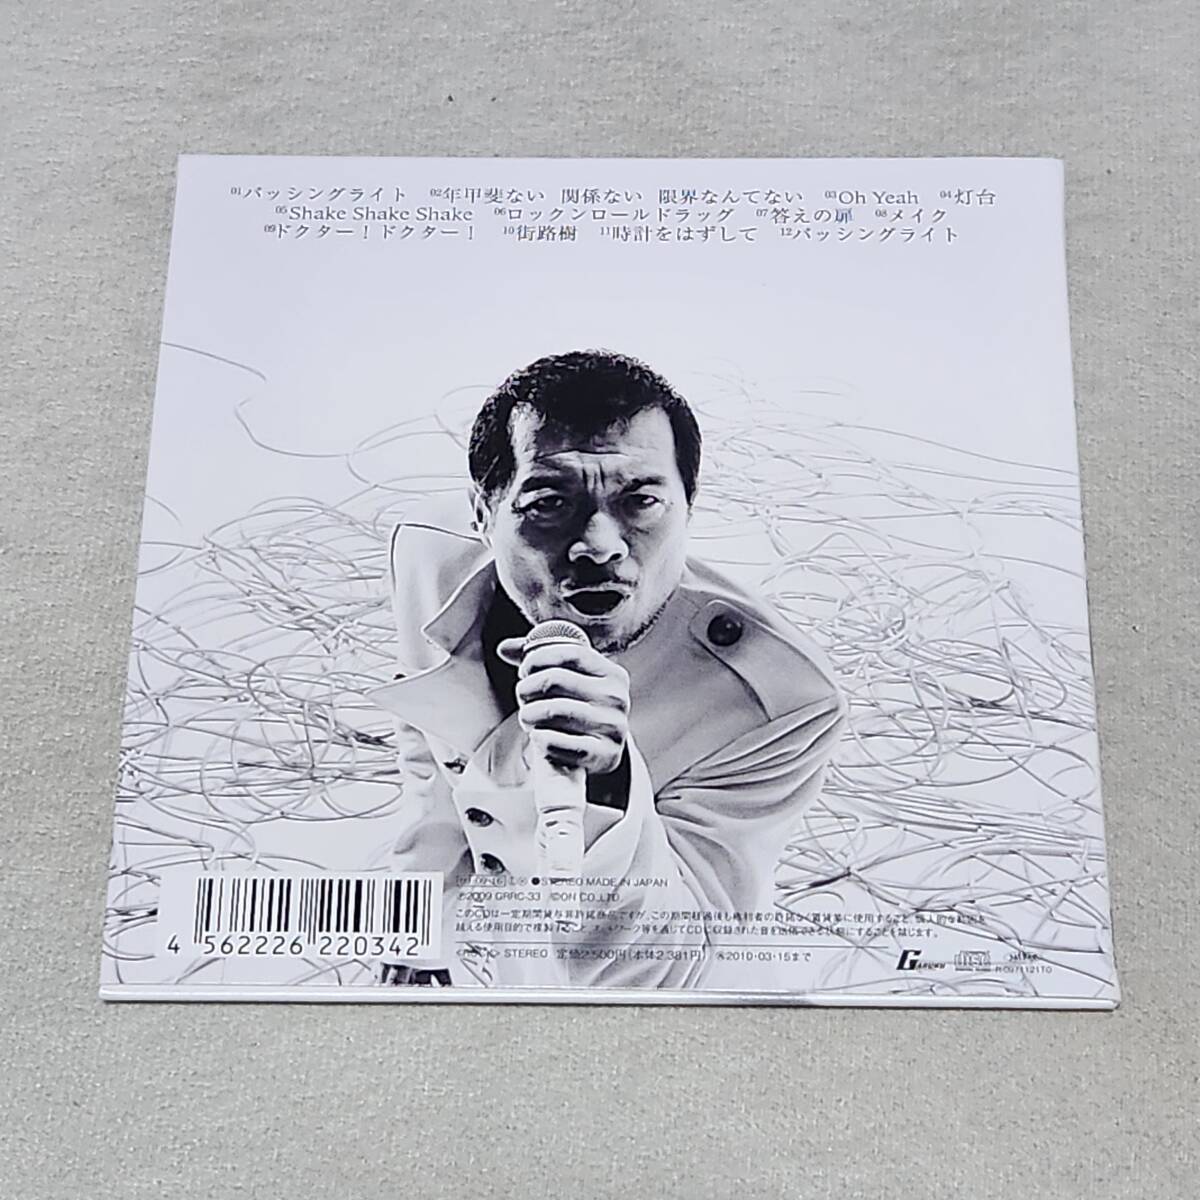  Yazawa Eikichi CD альбом ( бумага жакет )